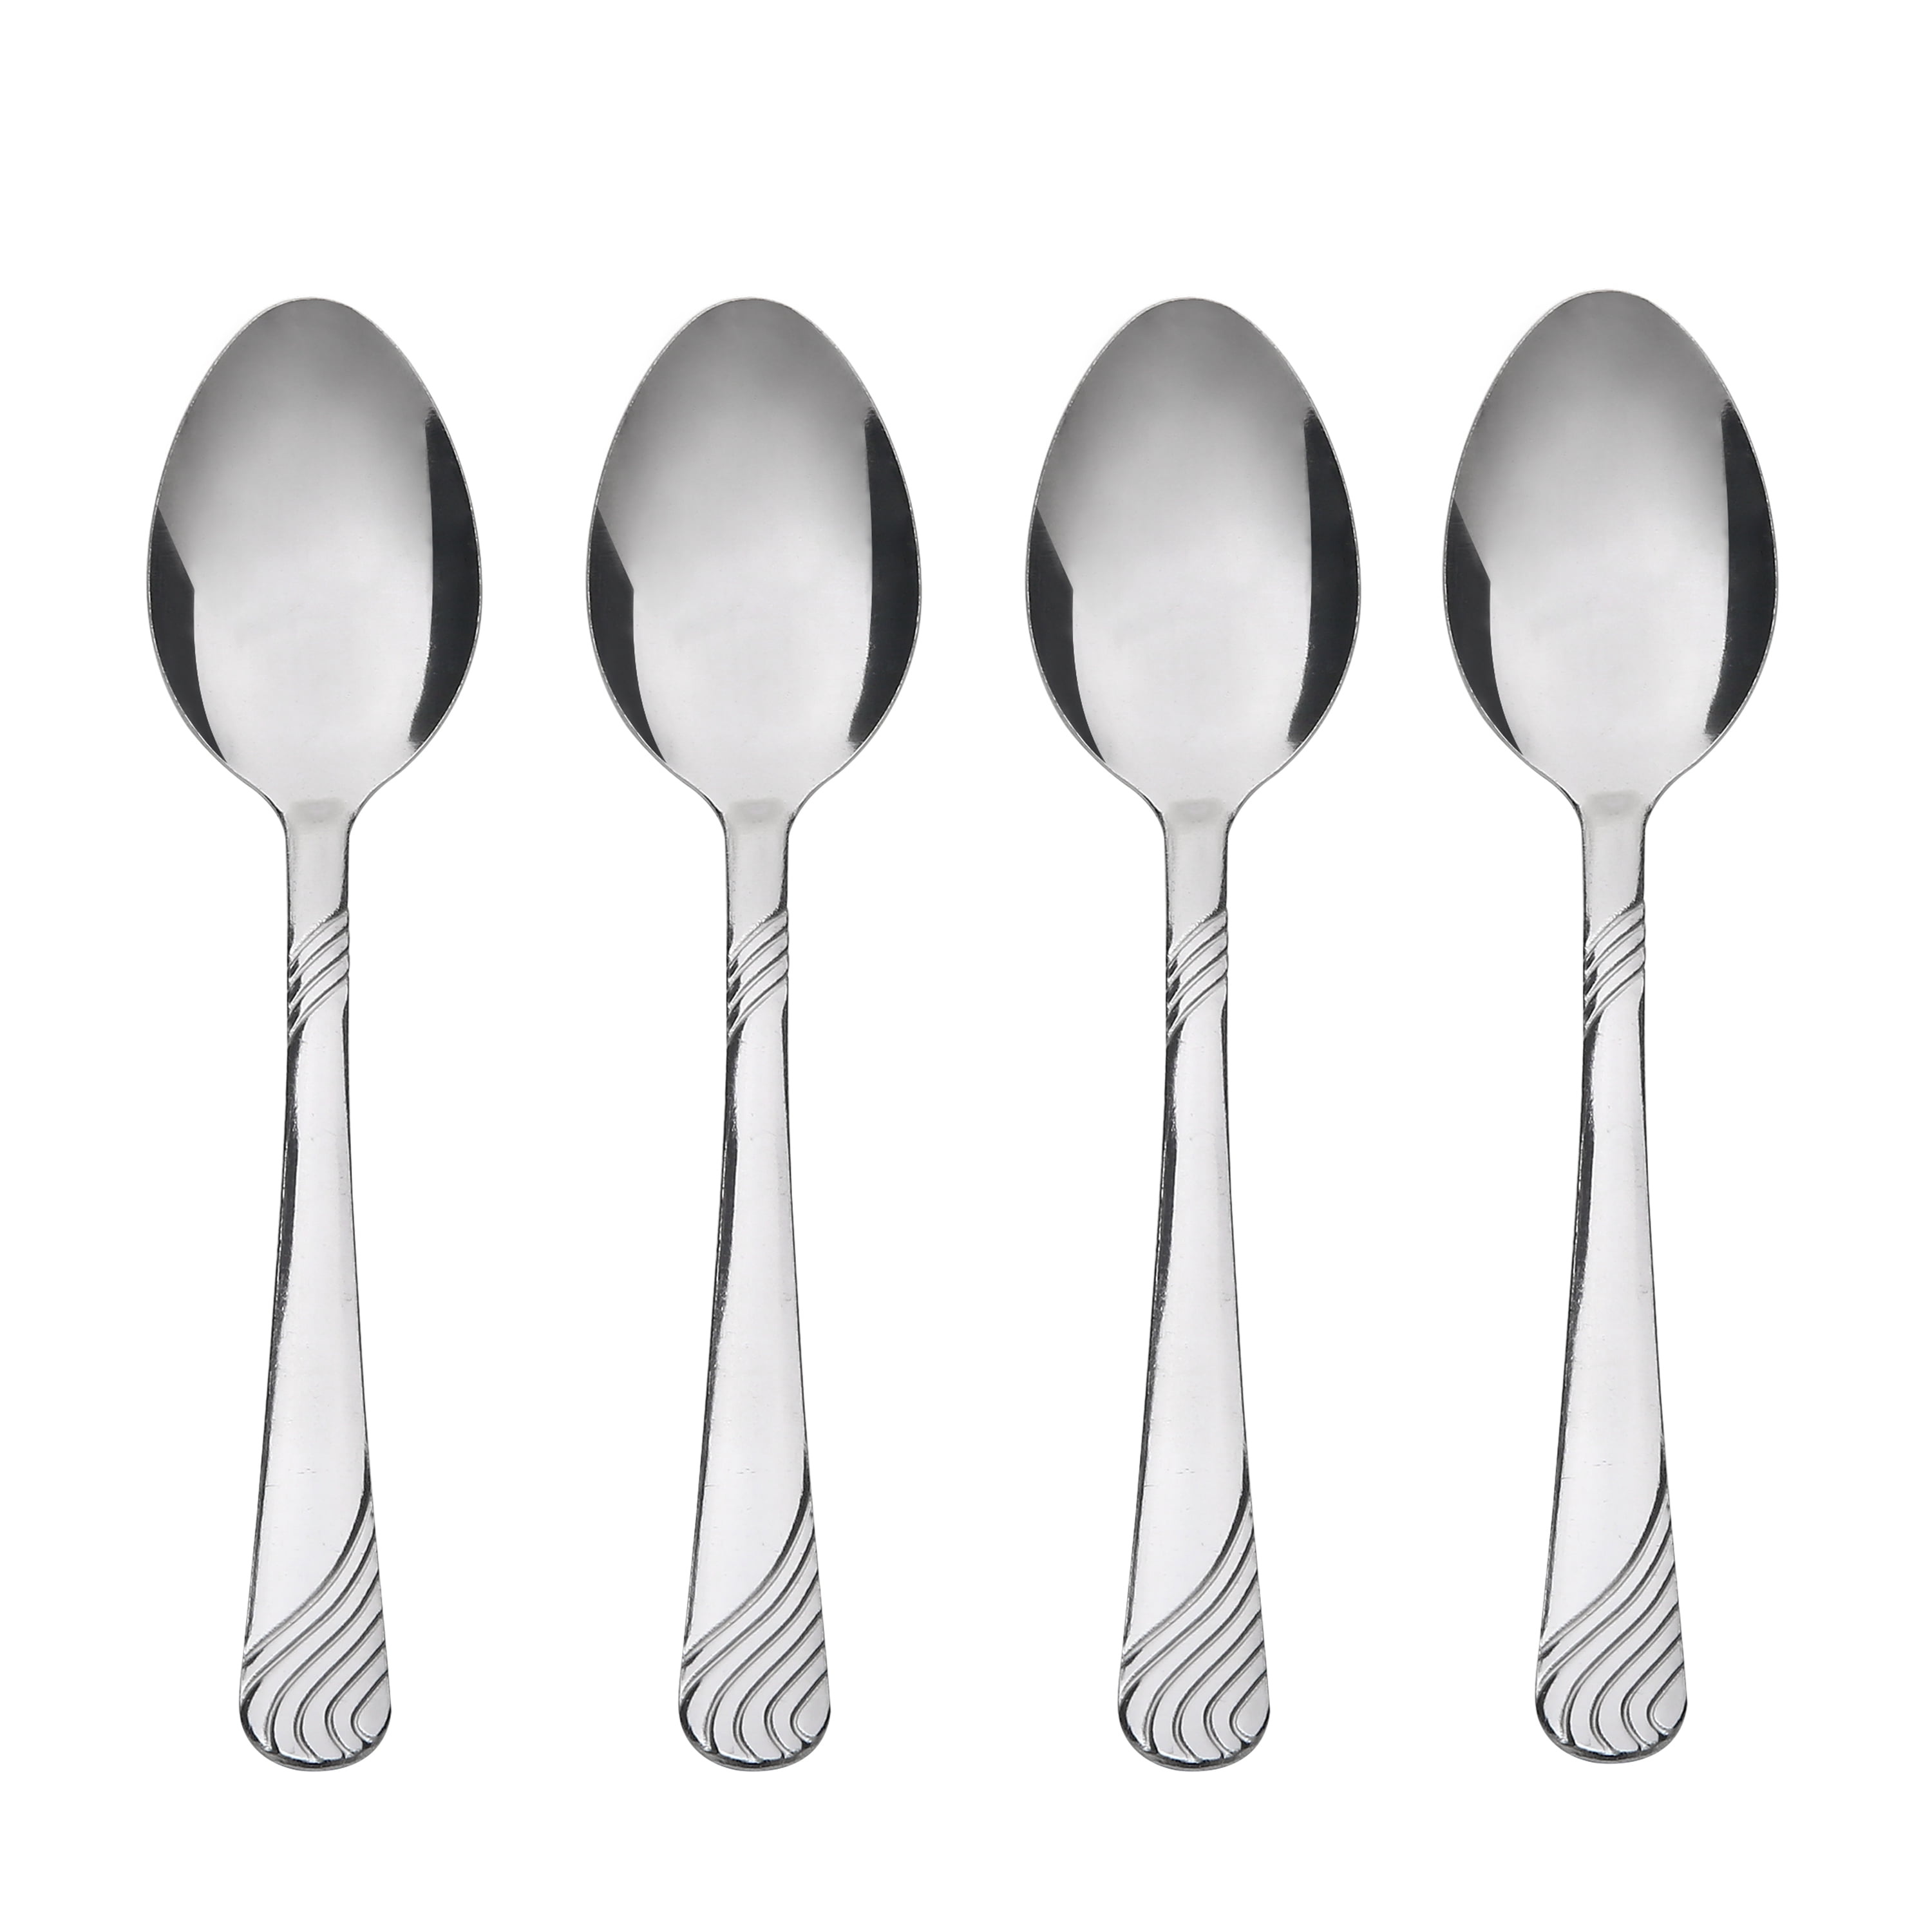 Mainstays 4-Piece Swirl Stainless Steel Dinner Spoon Set, Silver Tableware